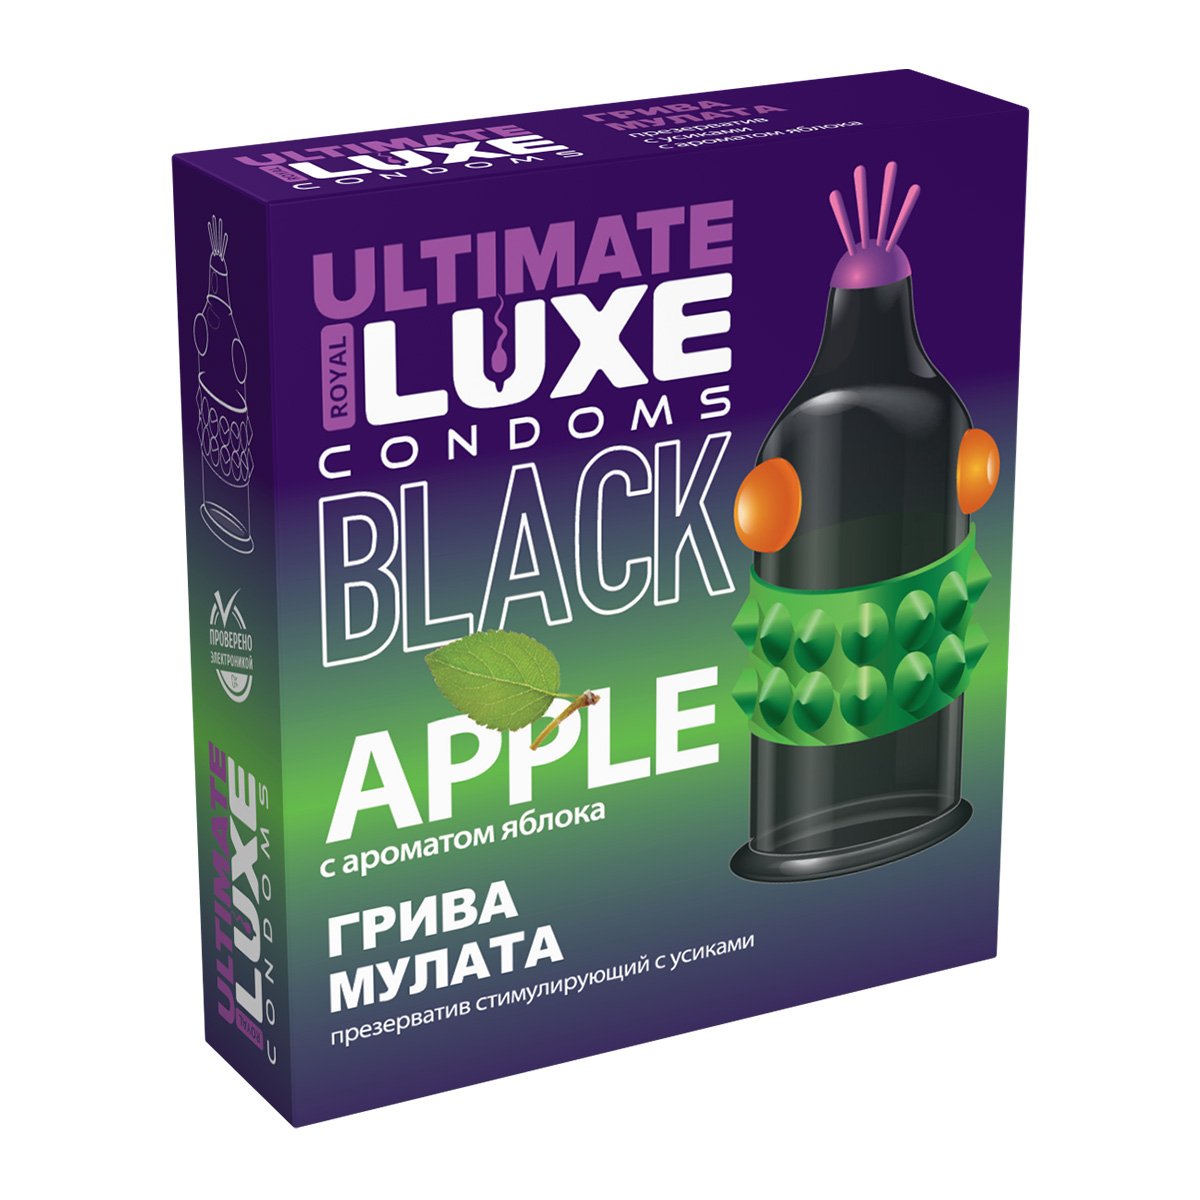 презервативы luxe black ultimate грива мулата с приятным ароматом с кислинкой яблока